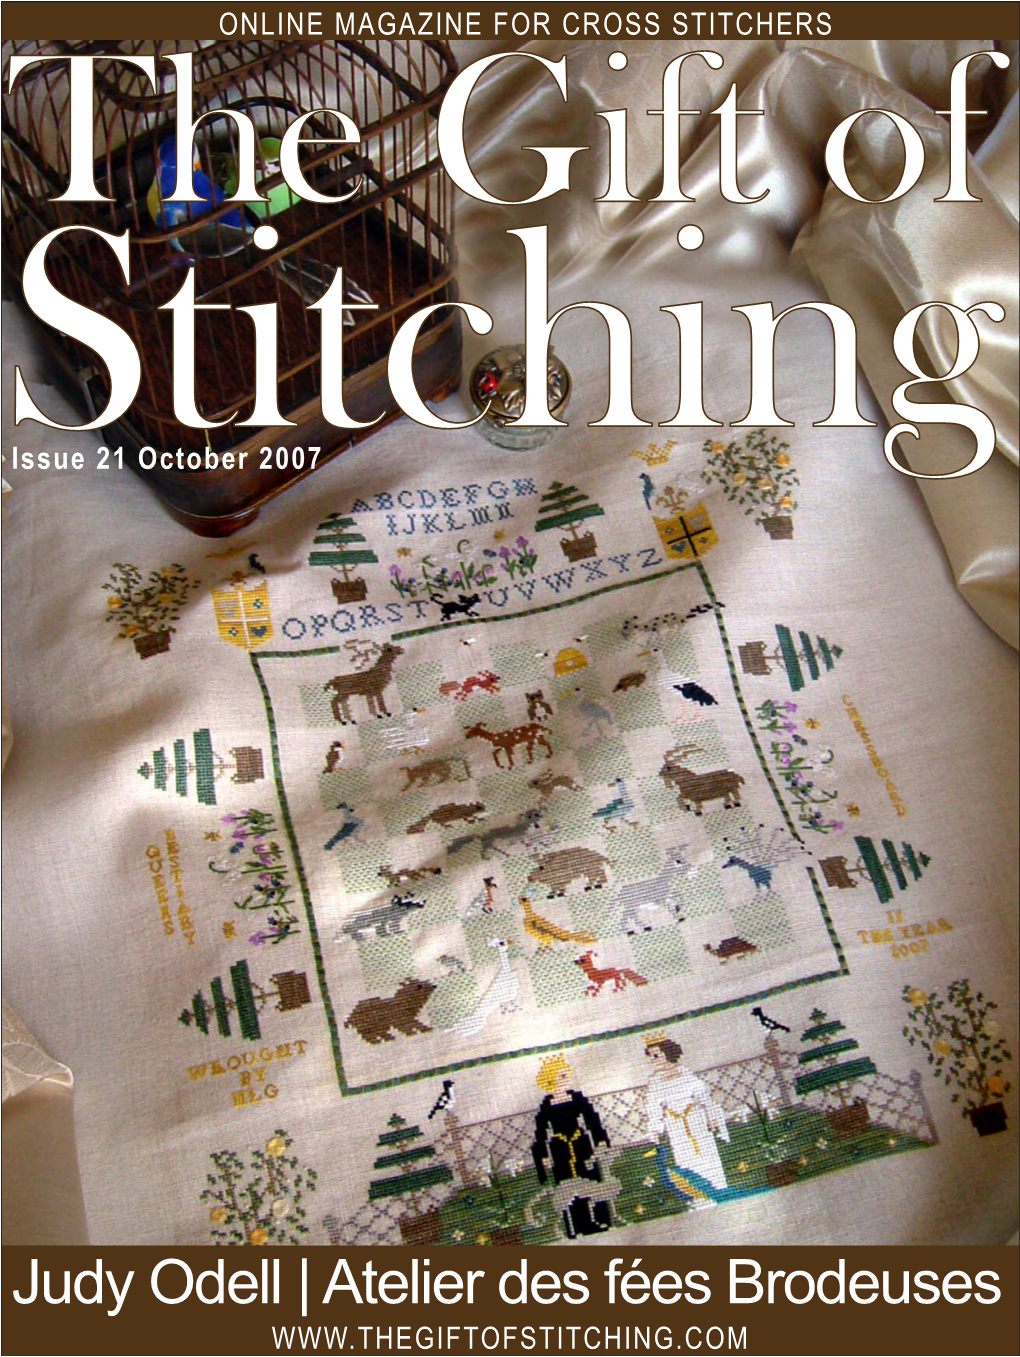 Issue 21 October 2007